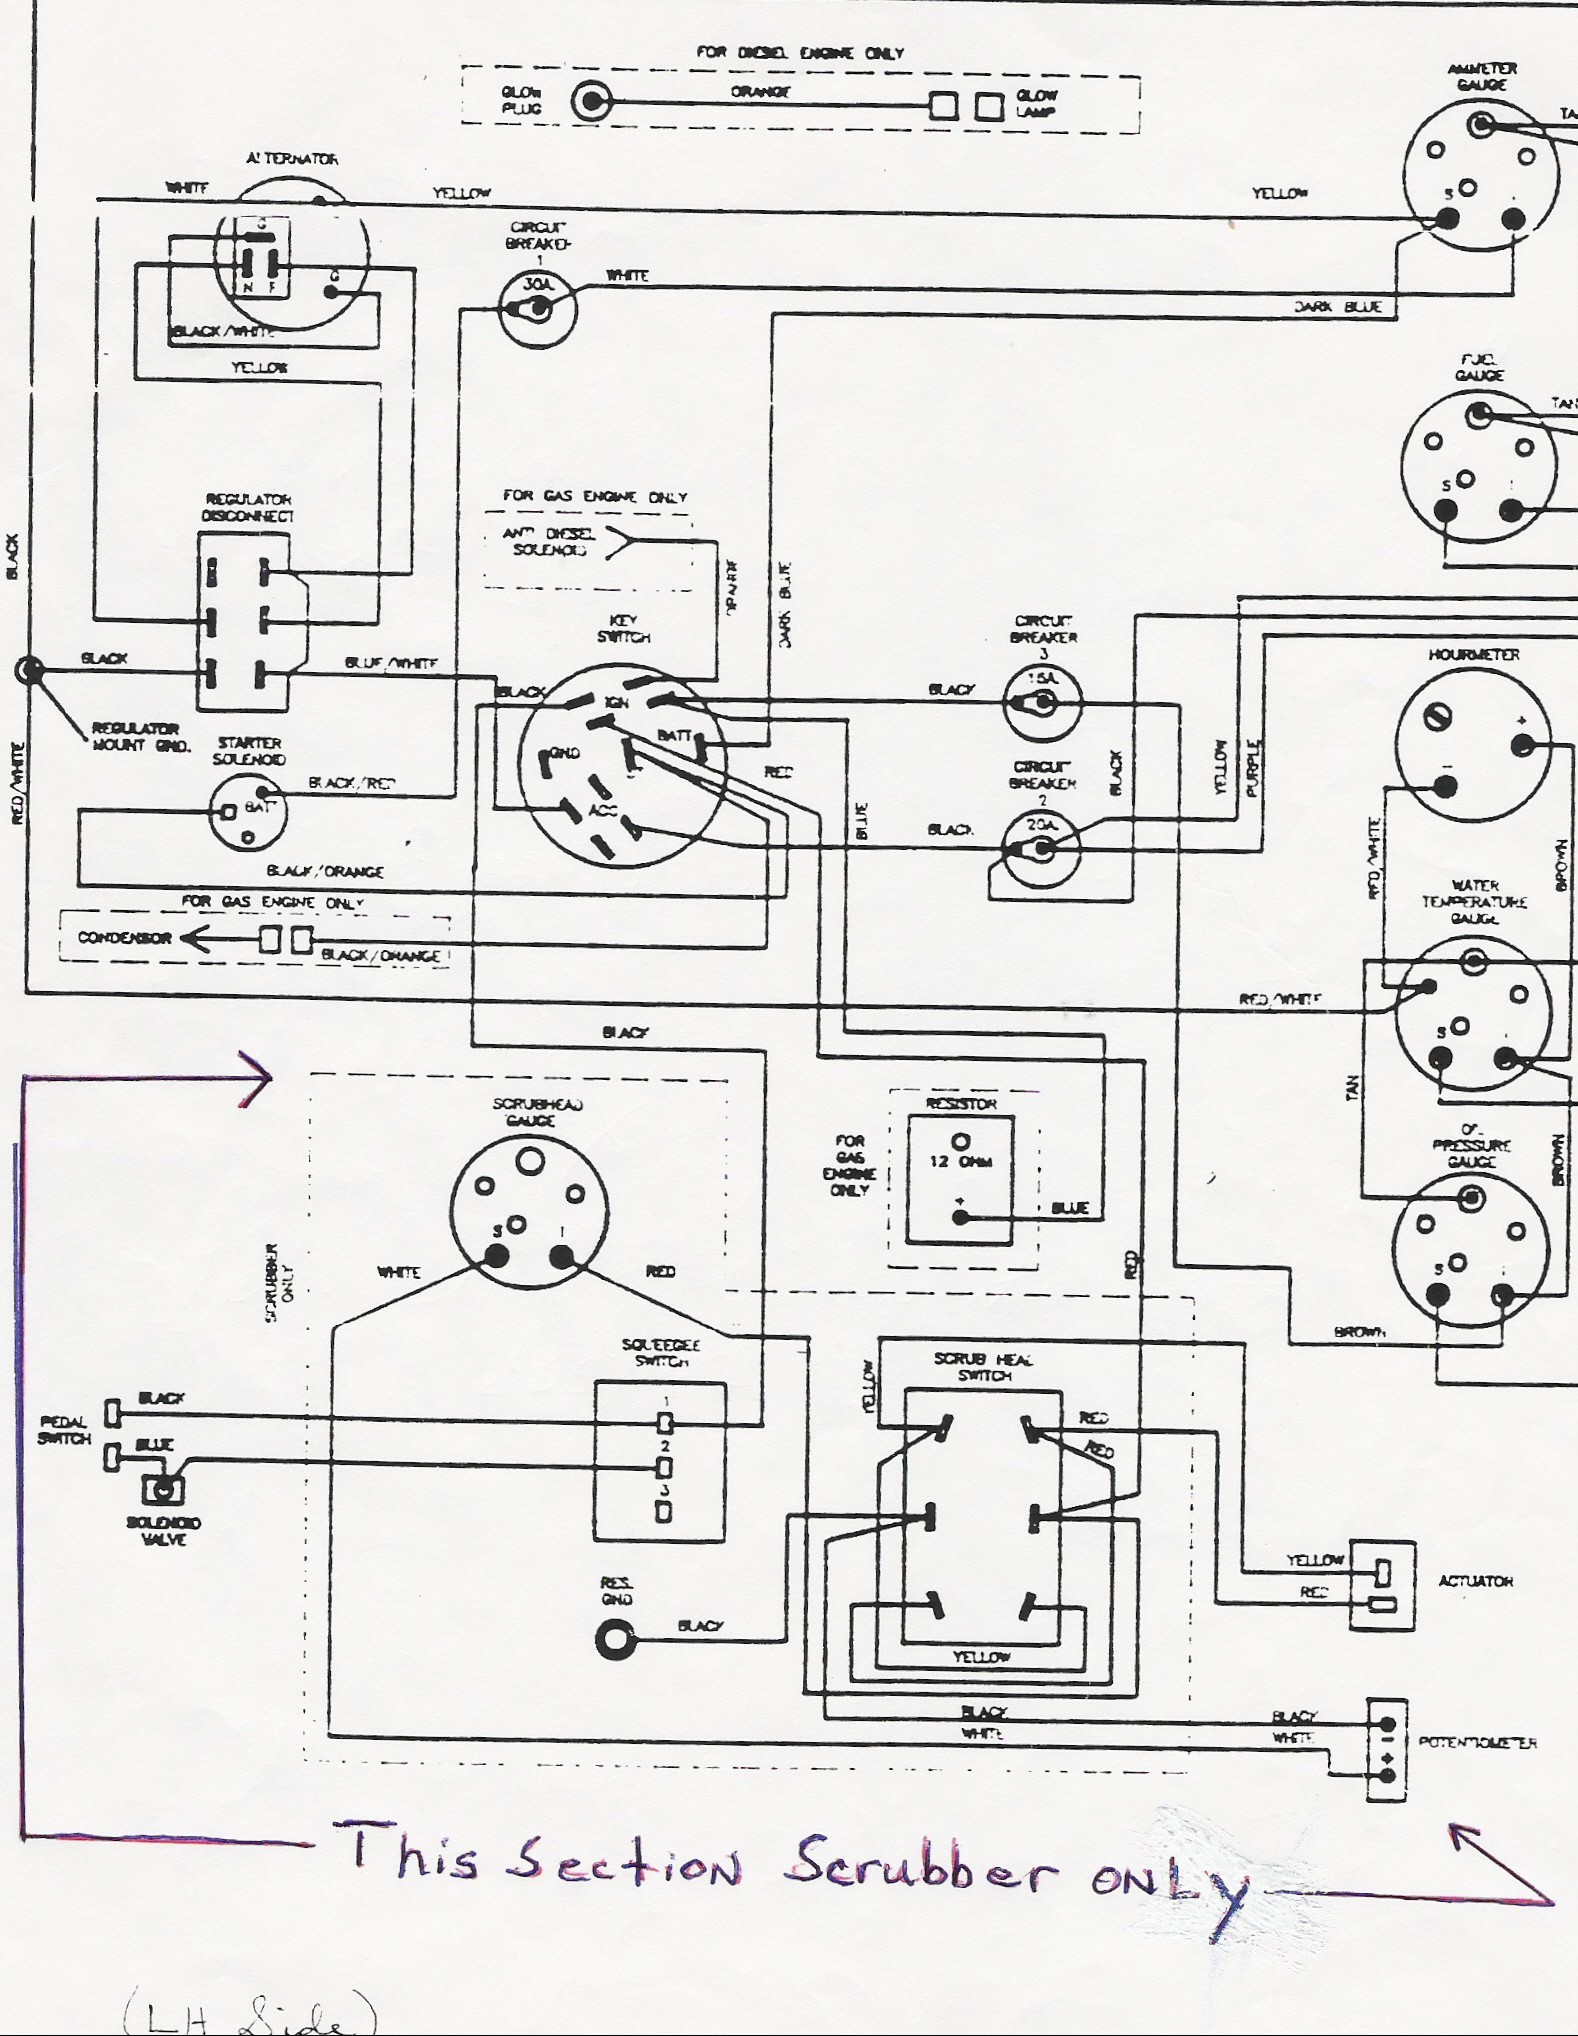 Wiring Diagram For an Rv Generator Best an Rv Generator Wiring